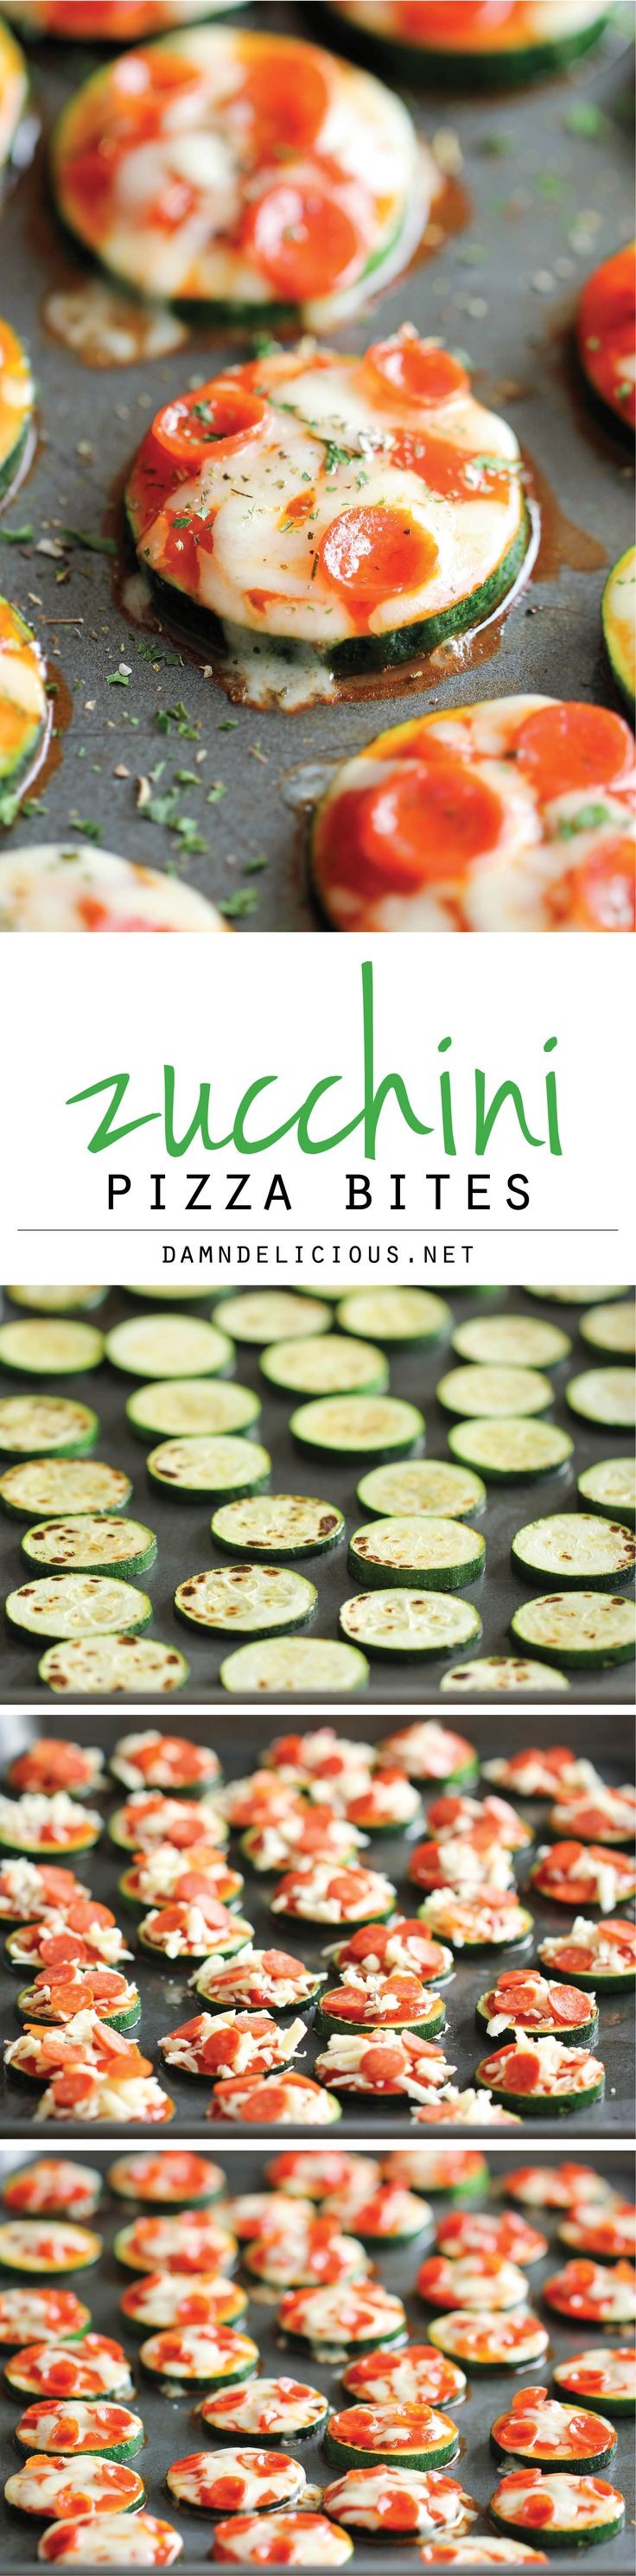 Zucchini Pizza Bites - Healthy, nutritious pizza b...